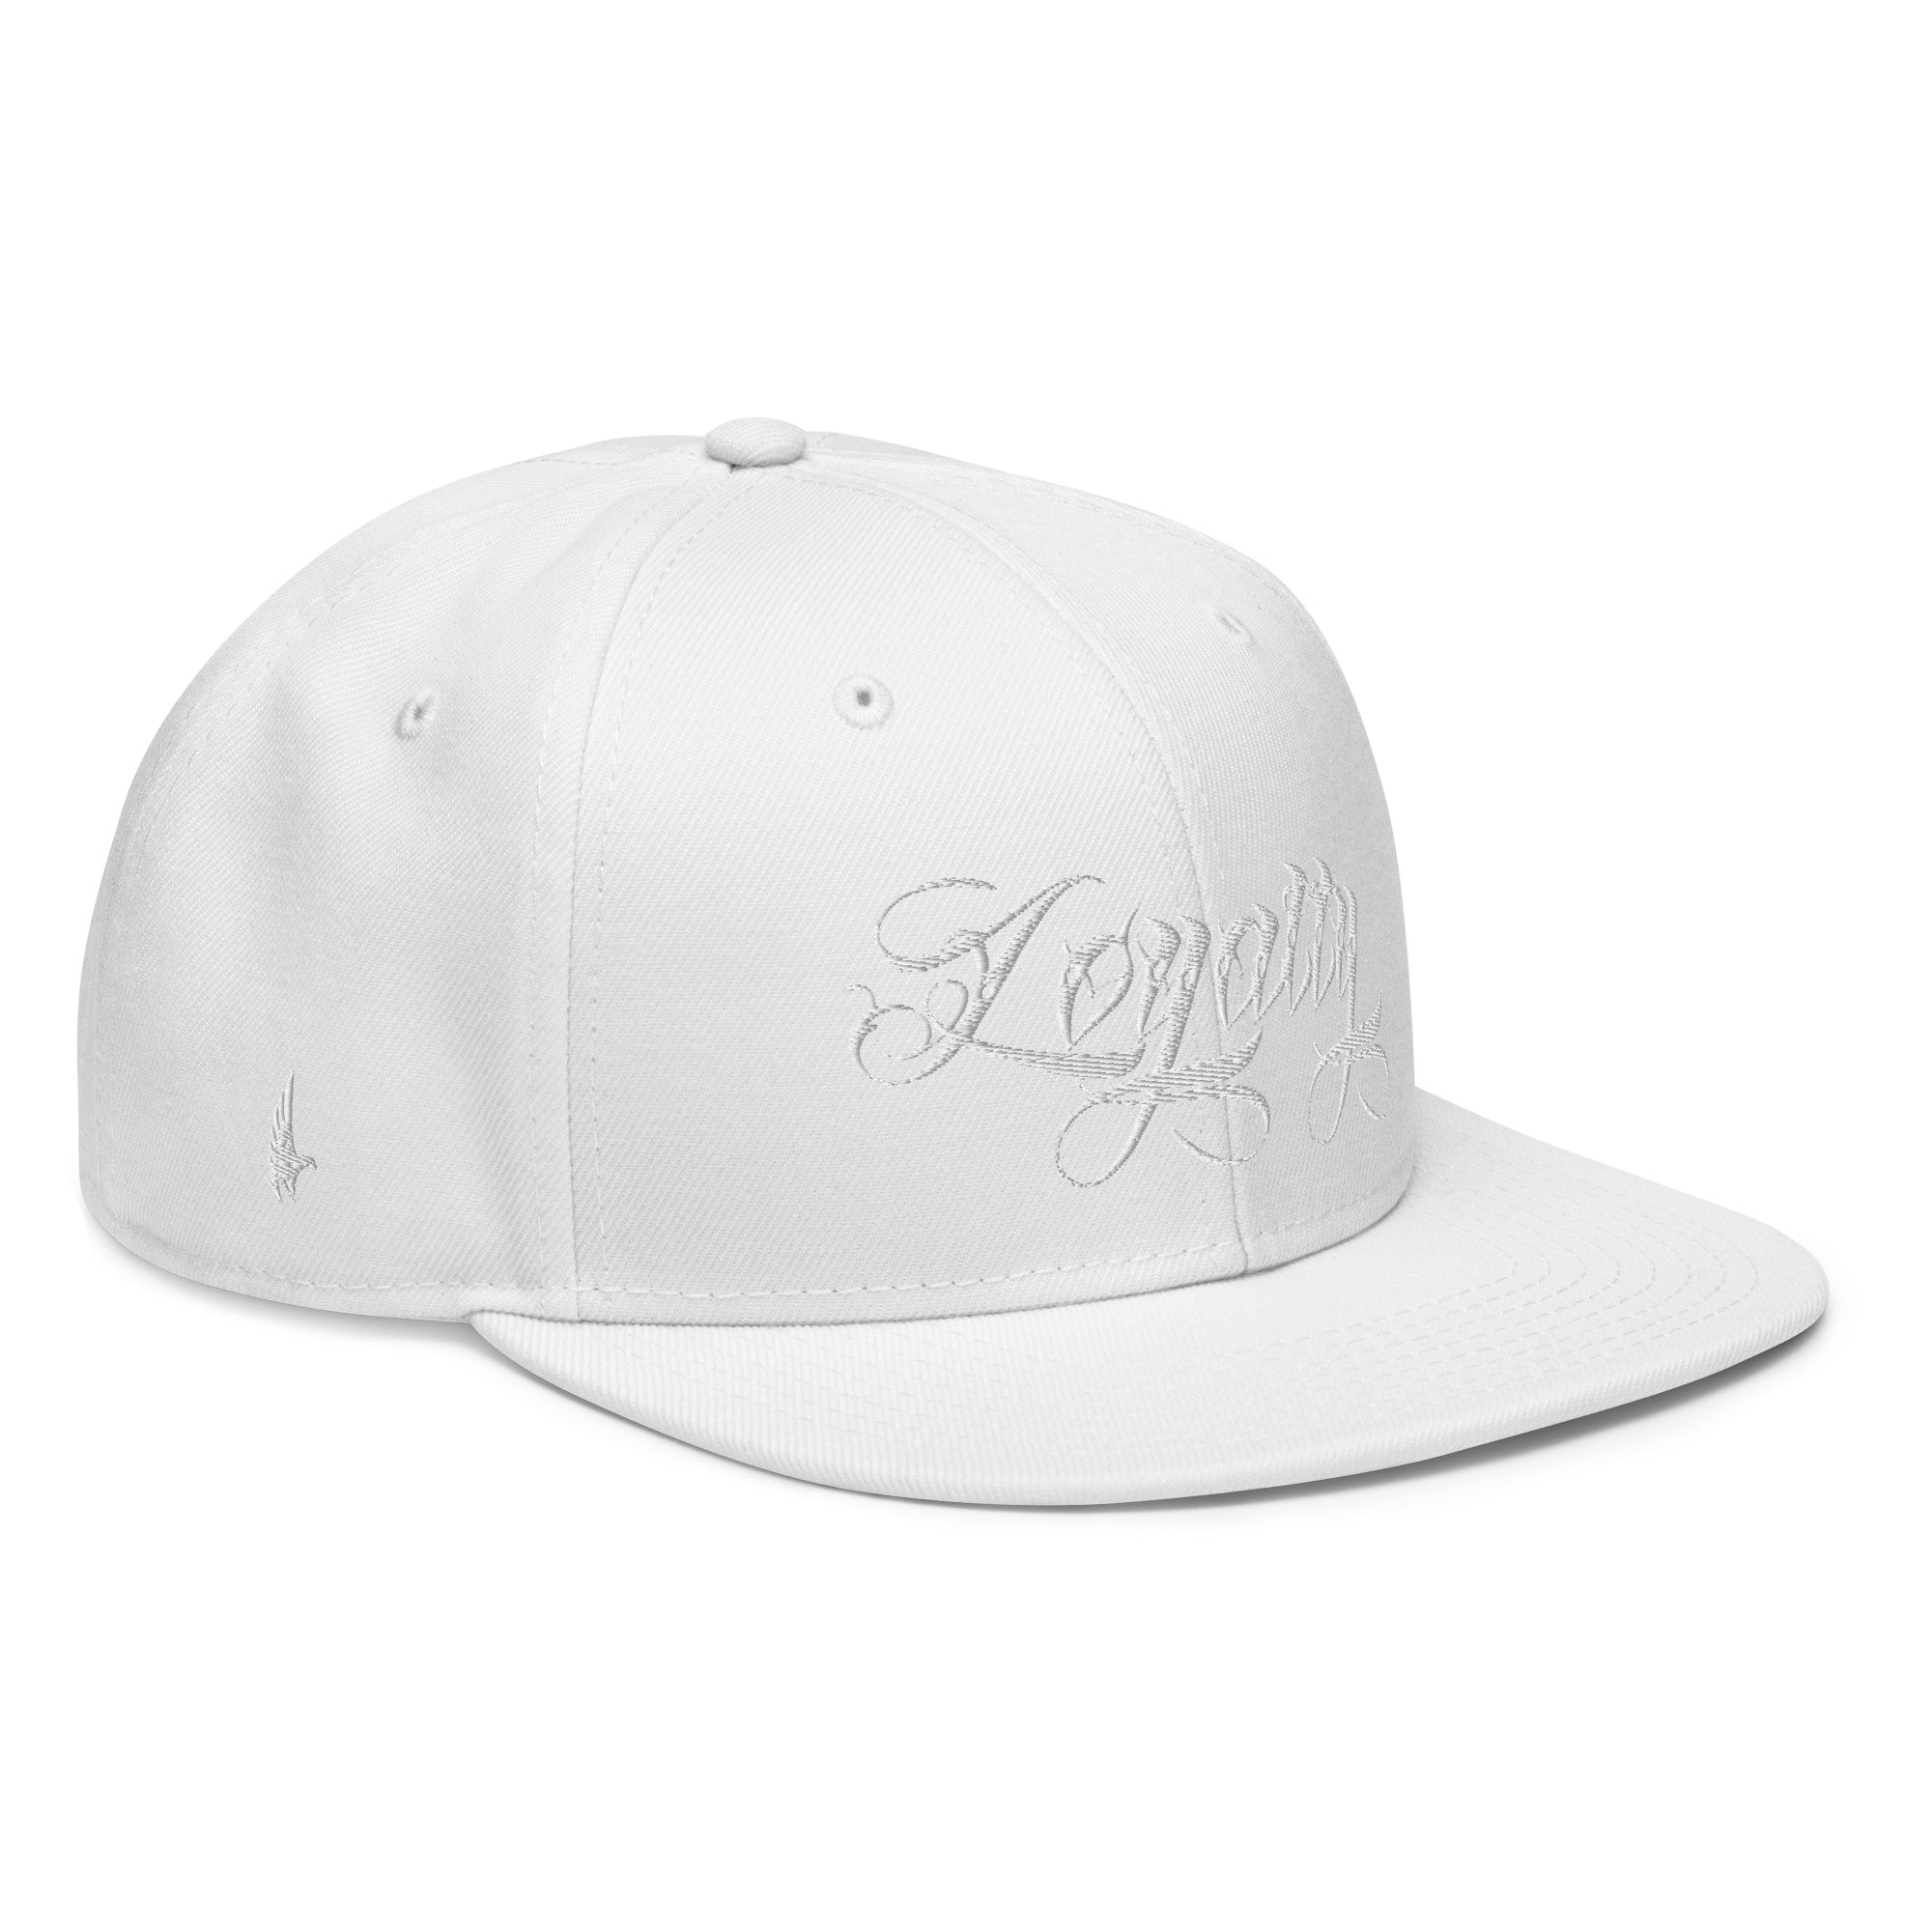 Loyalty Ice Snapback Hat - White / White OS - Loyalty Vibes